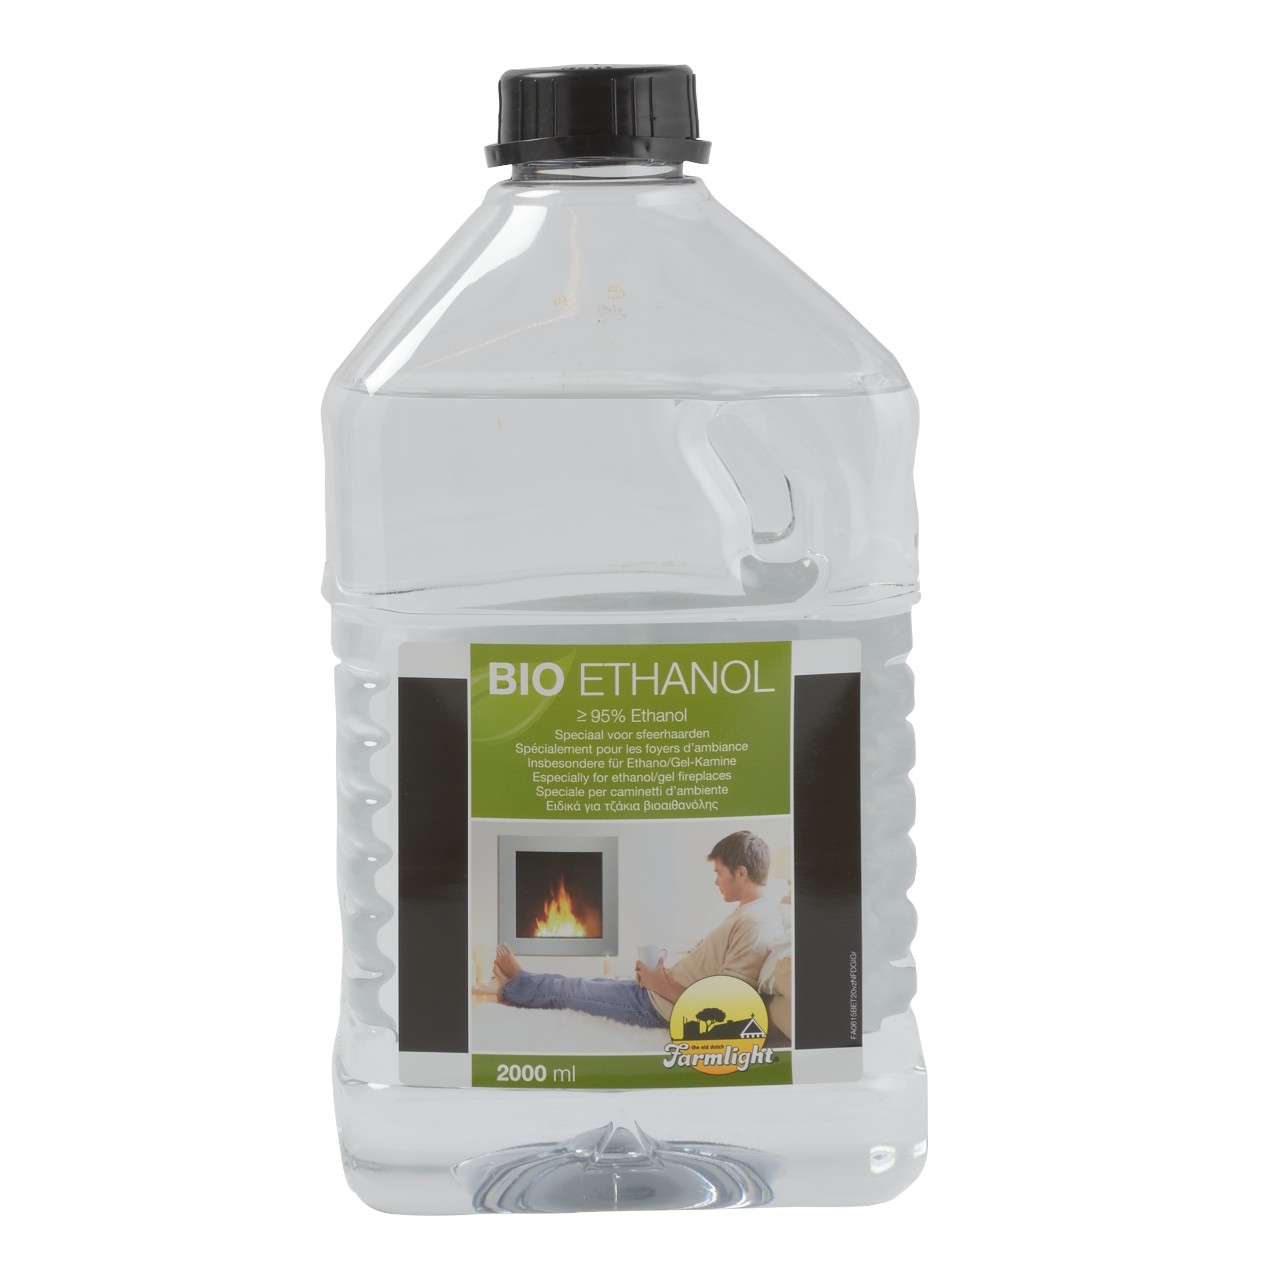 ik ben trots Onderdompeling Eigenlijk Farmlight Bio Ethanol Stuk 2 liter | Sligro.nl